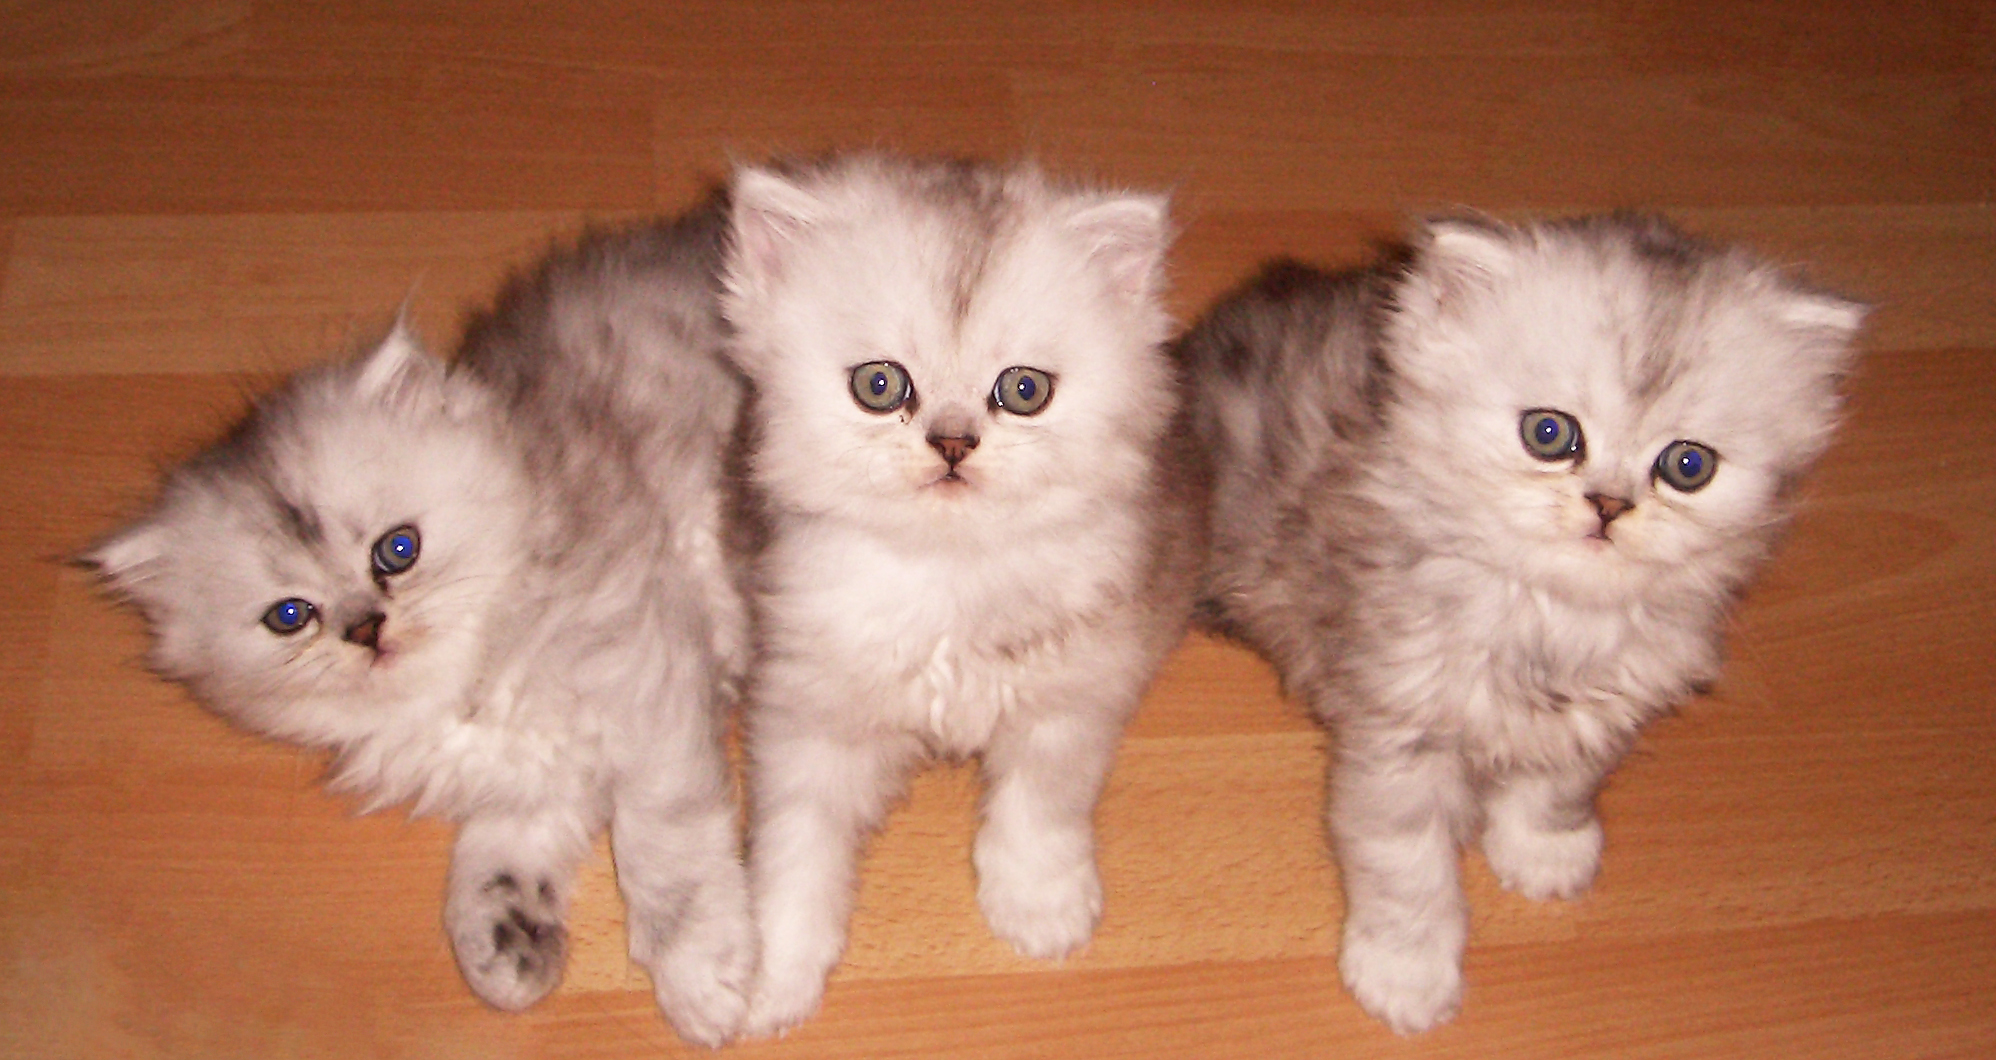 Drei Kittens